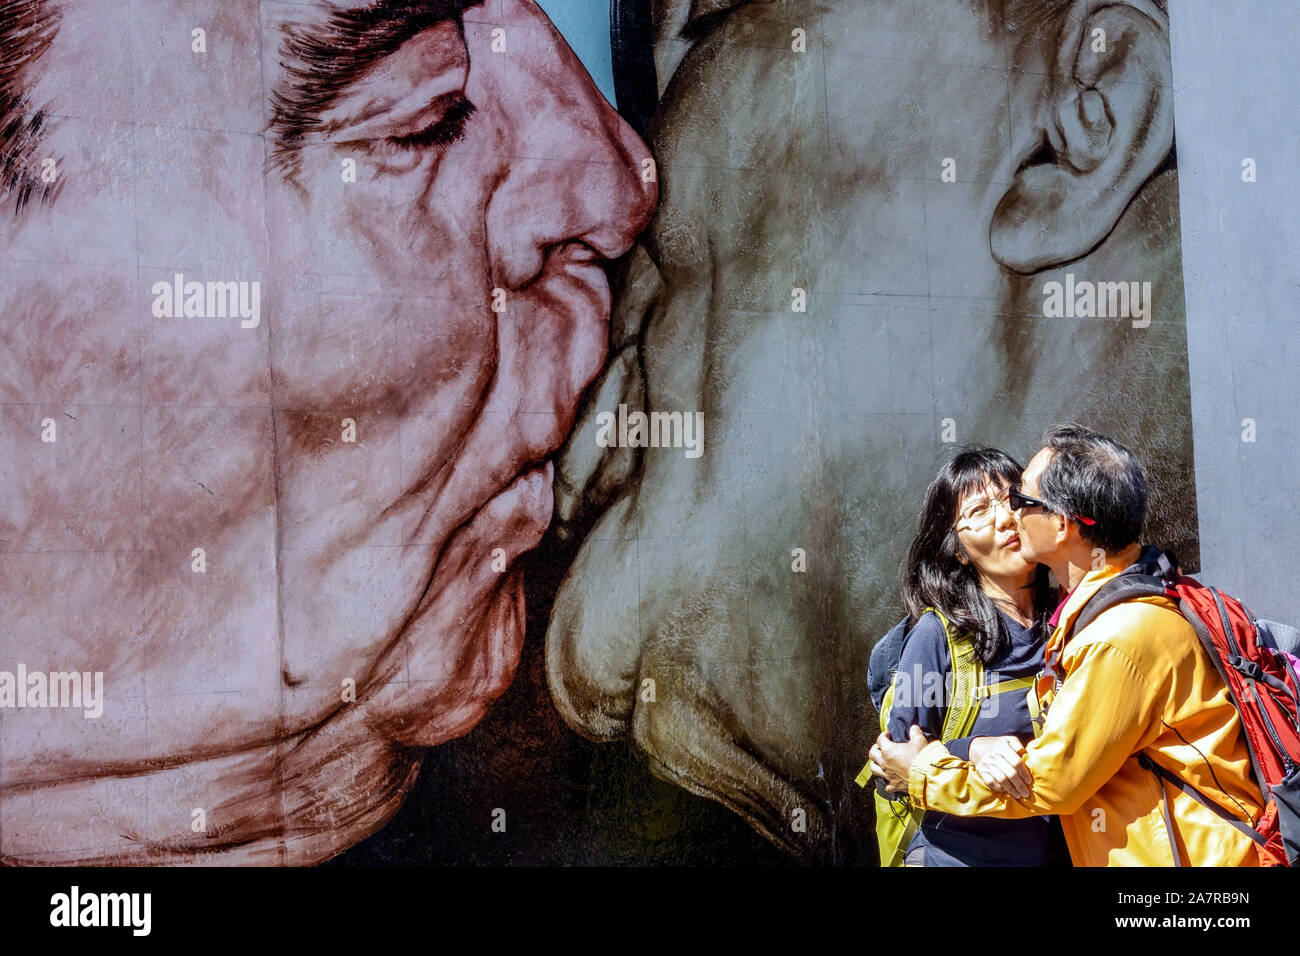 Berlin wall graffiti East Side Gallery, Asian tourists are kissing under a frightening kiss Brezhnev Honecker Germany graffiti wall Stock Photo